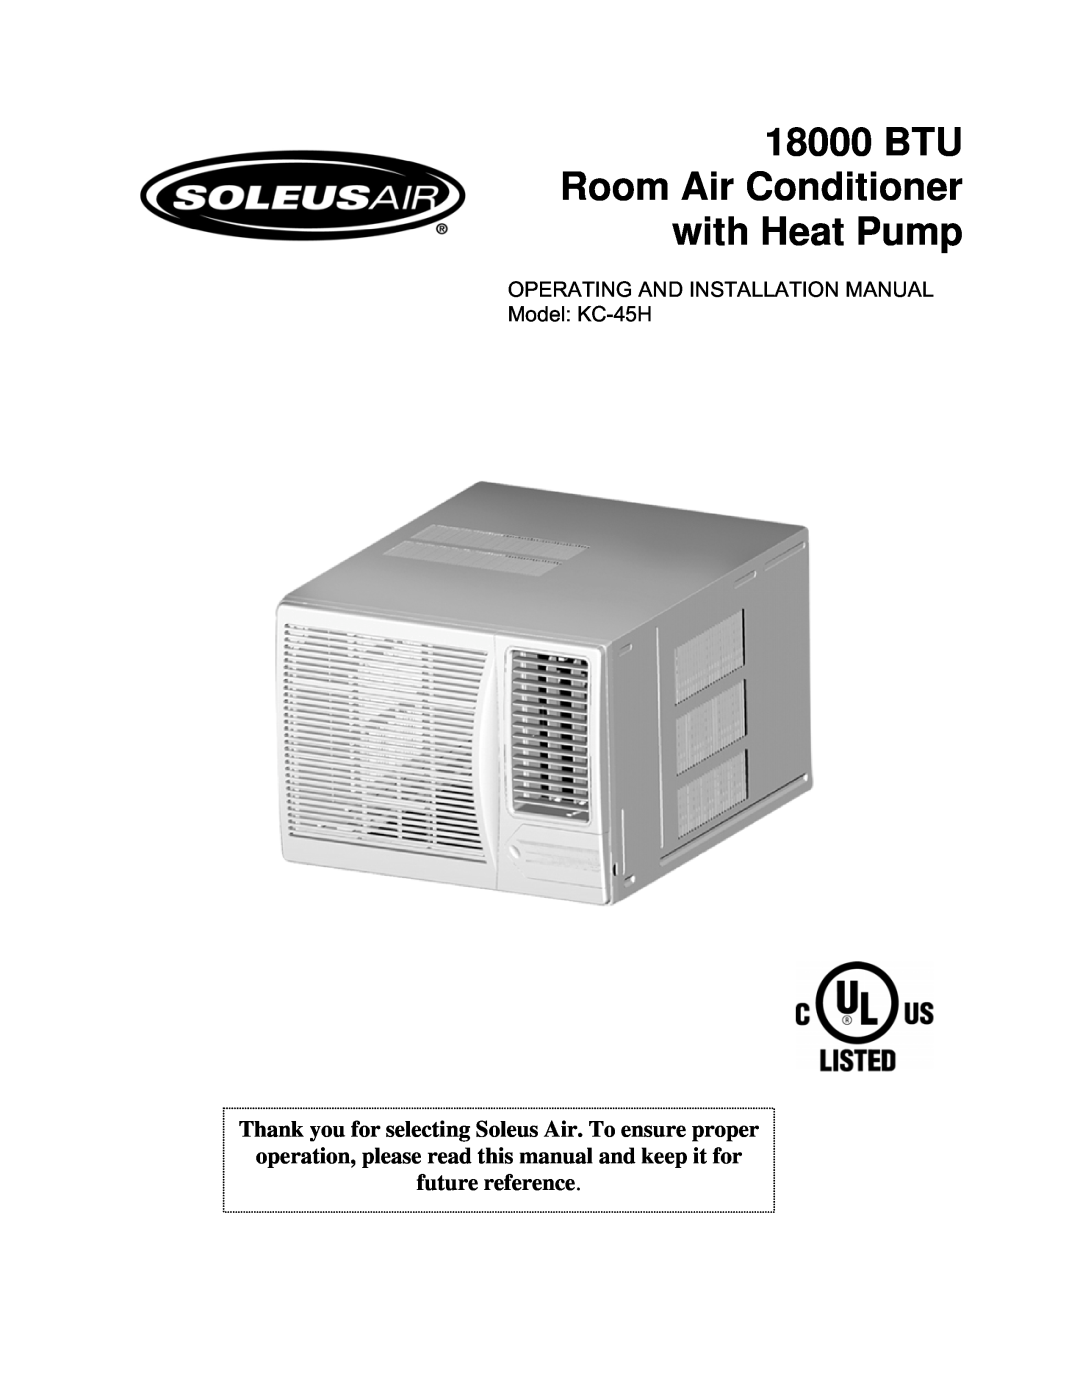 Soleus Air KC-45H installation manual BTU Room Air Conditioner with Heat Pump 